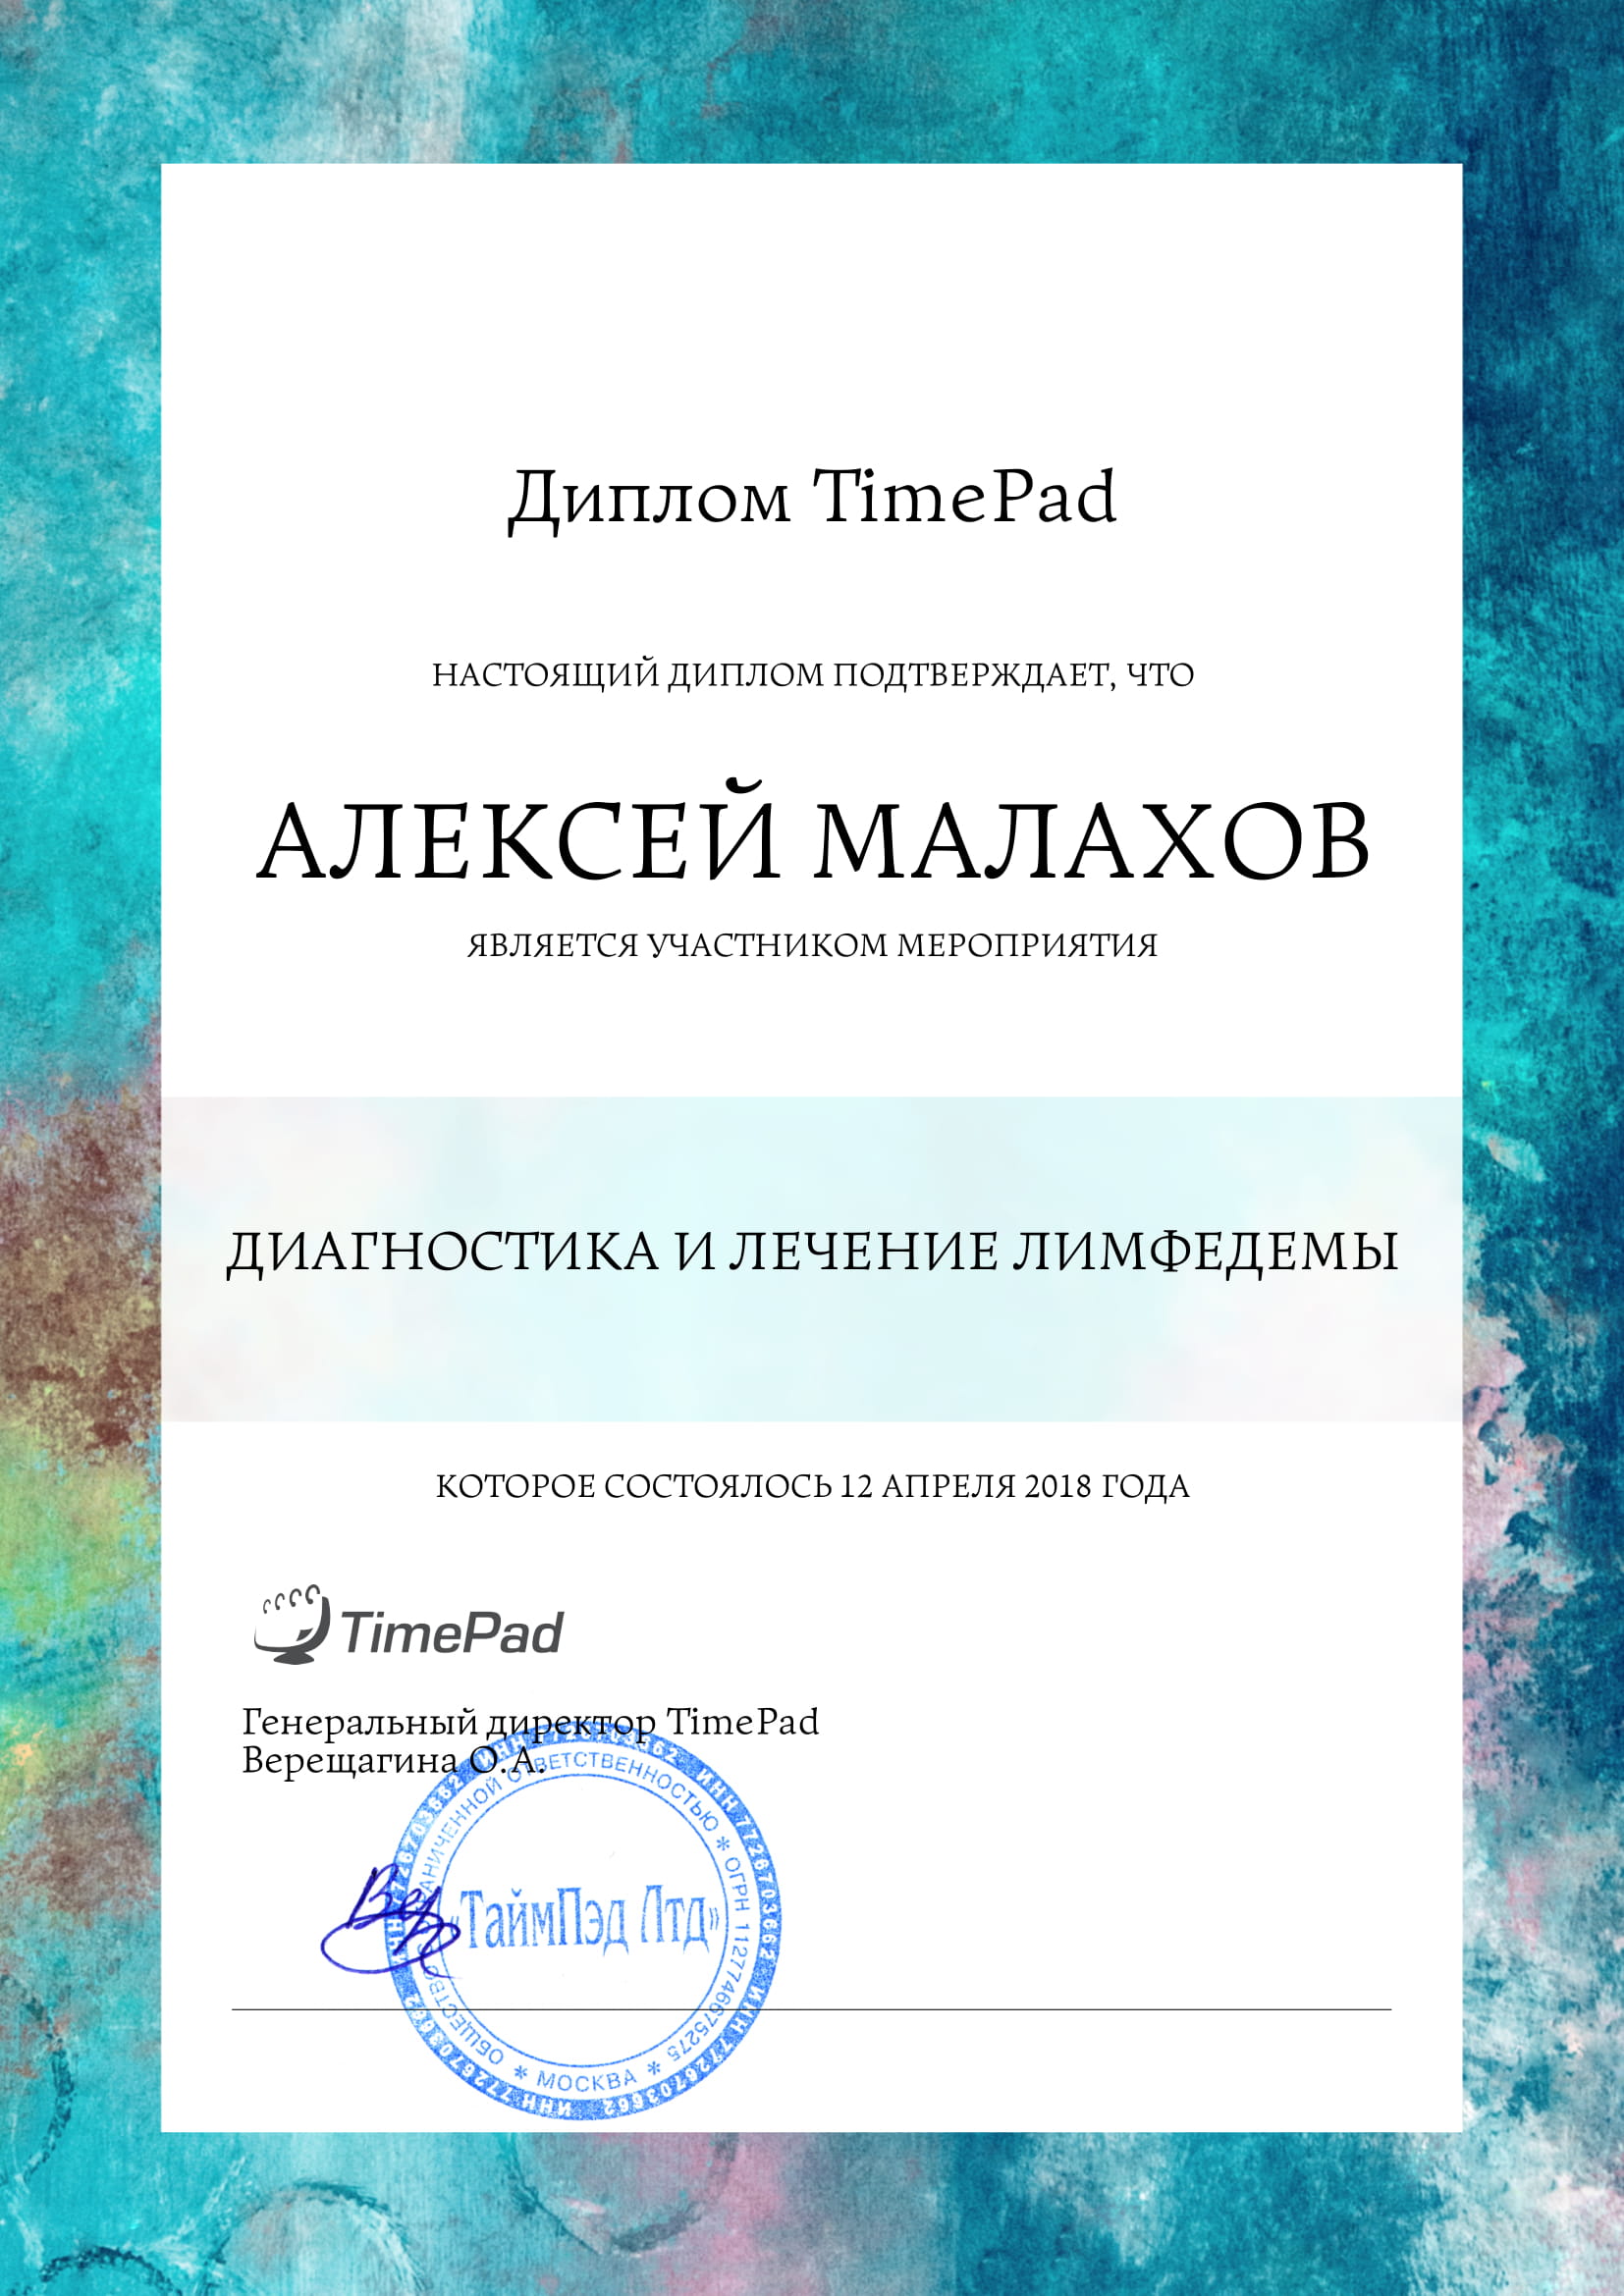 TimePad diploma 232497 1